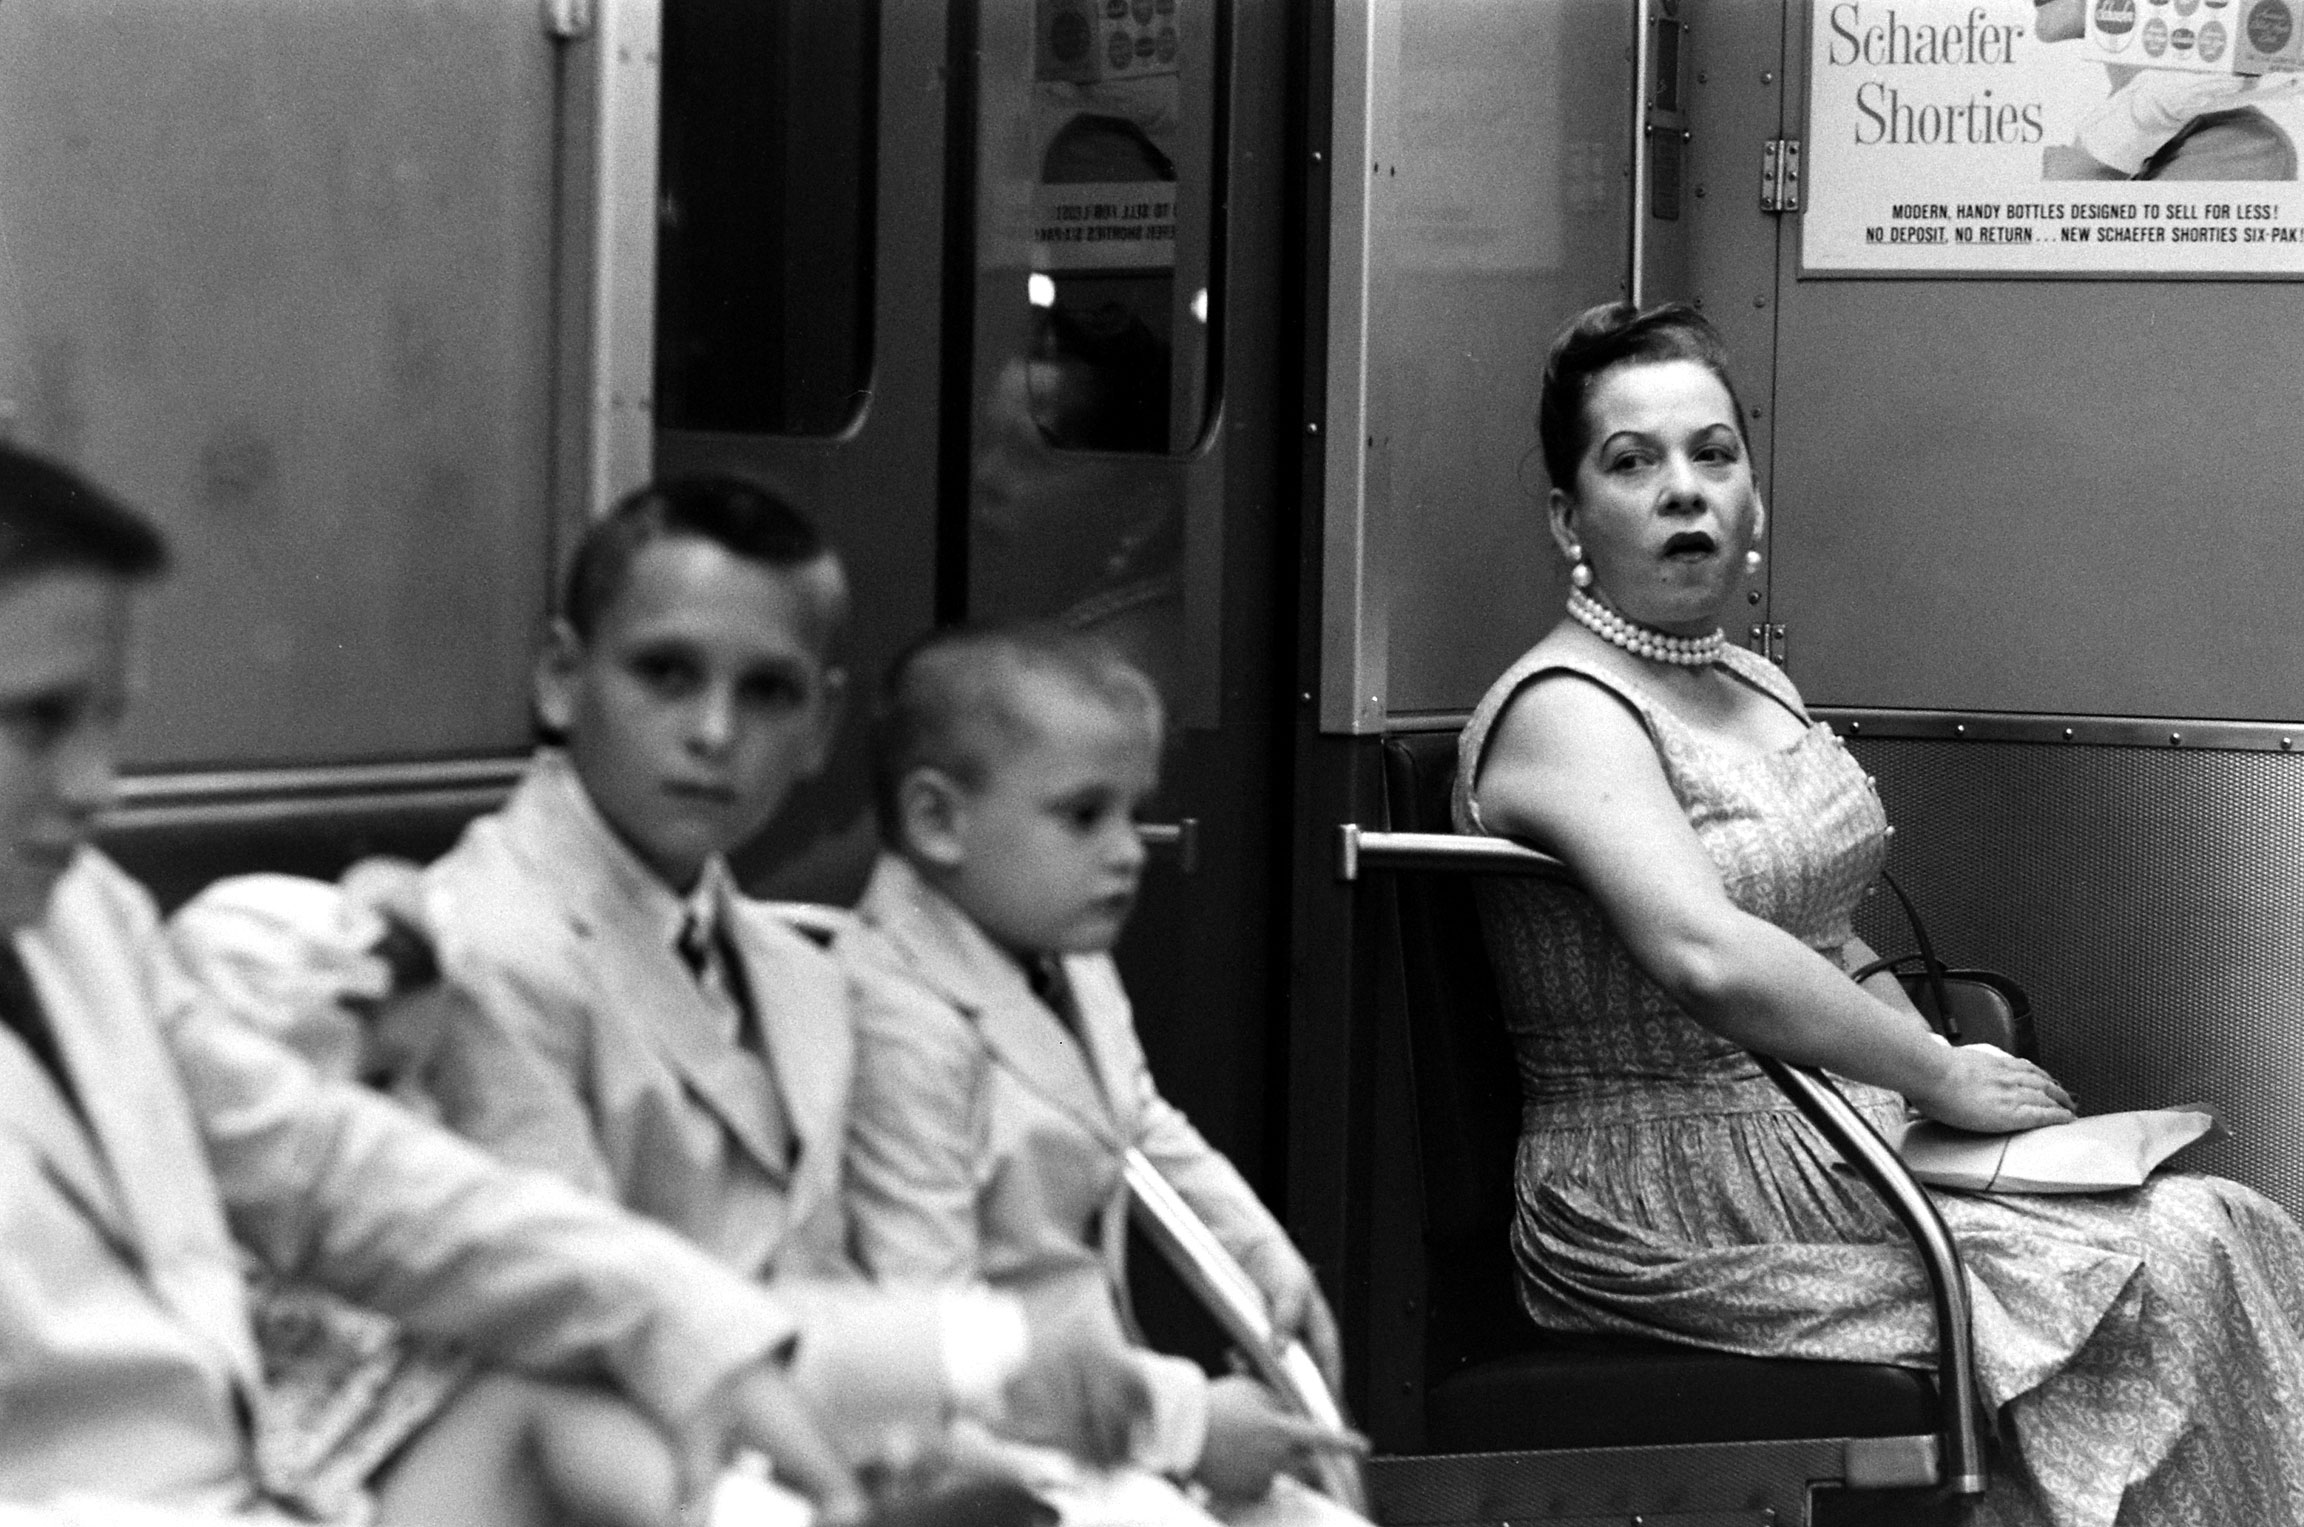 Scene on the New York subway, 1959.